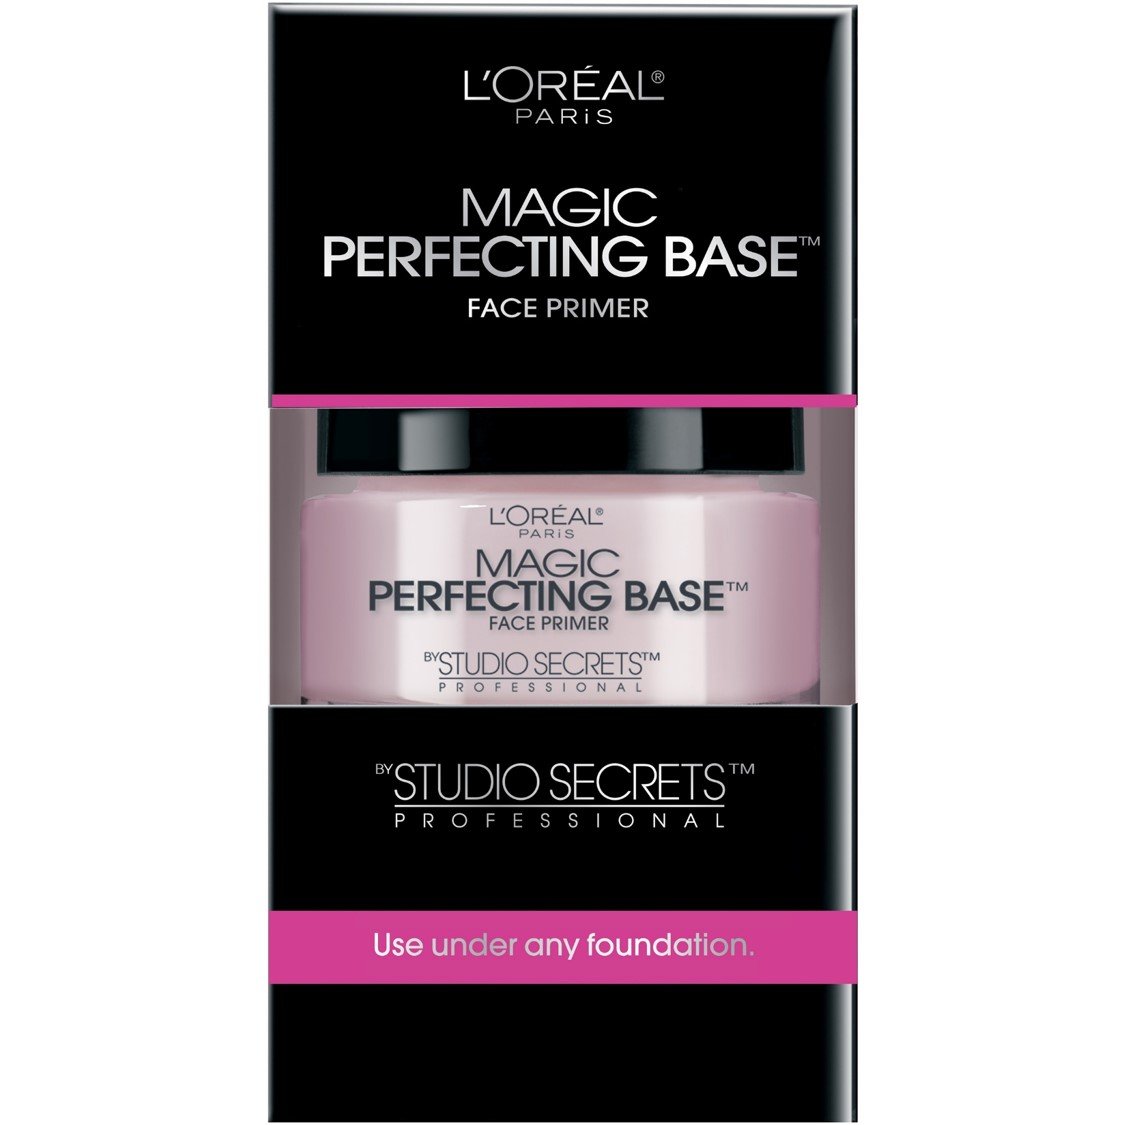  LOreal Paris Magic Perfecting Base Face Primer, 0.5 FL (oz)